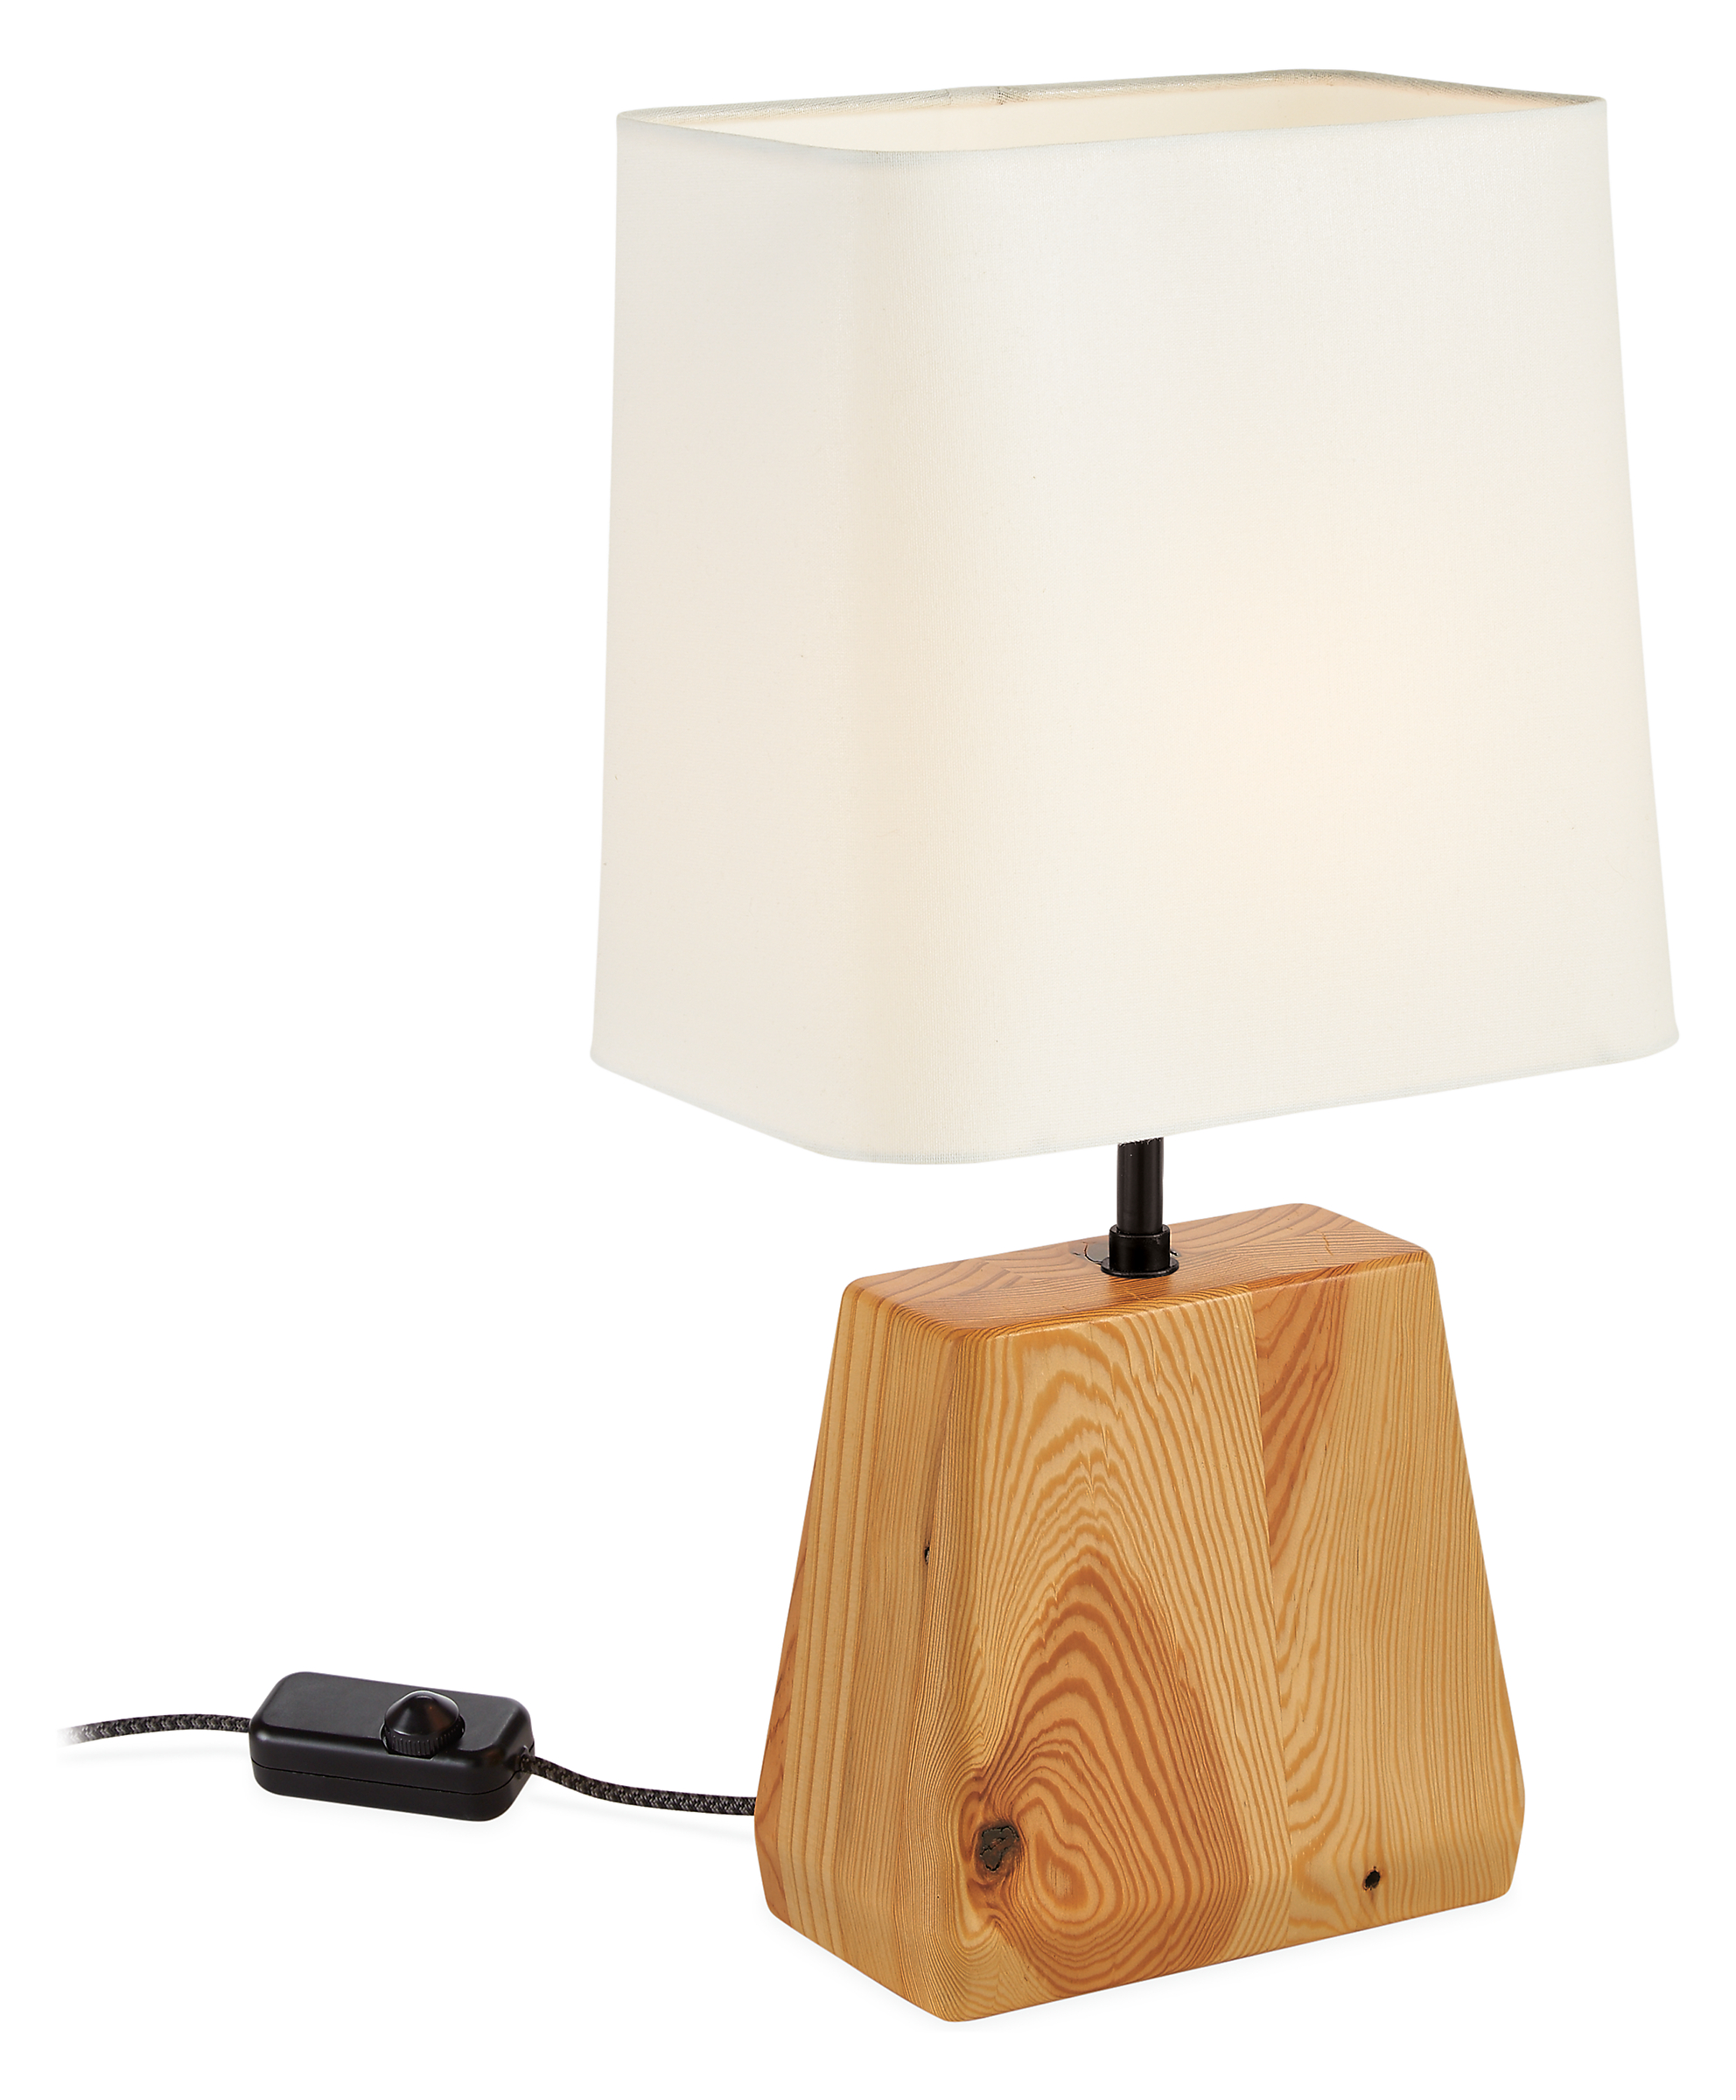 Henson Reclaimed Wood Table Lamp